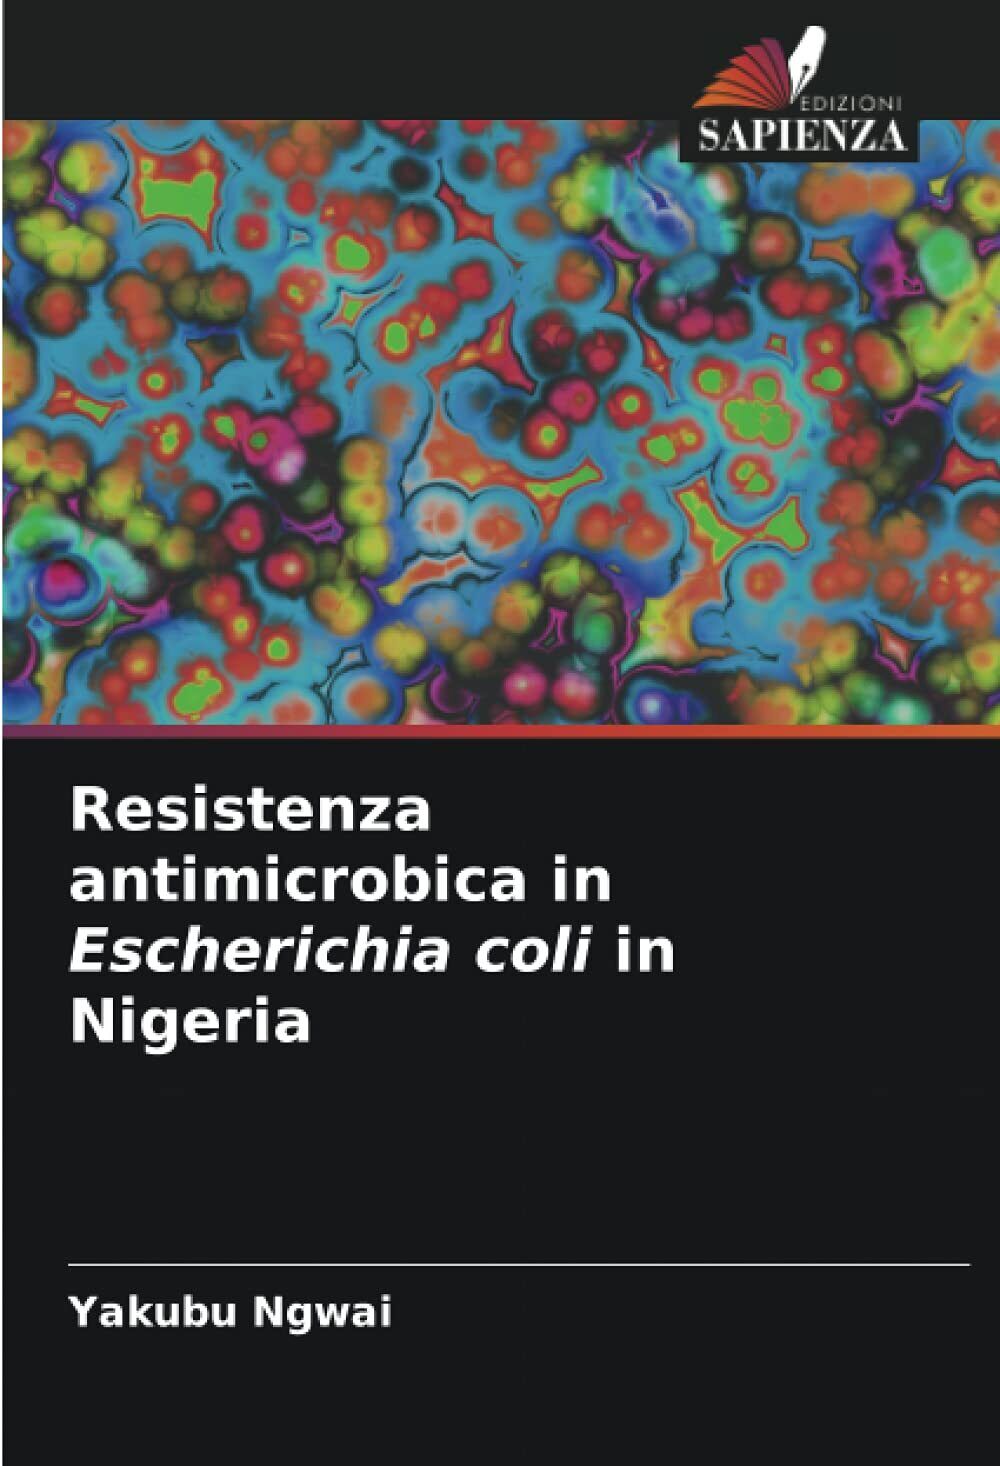 Resistenza antimicrobica in Escherichia coli in Nigeria - Sapienza, 2022